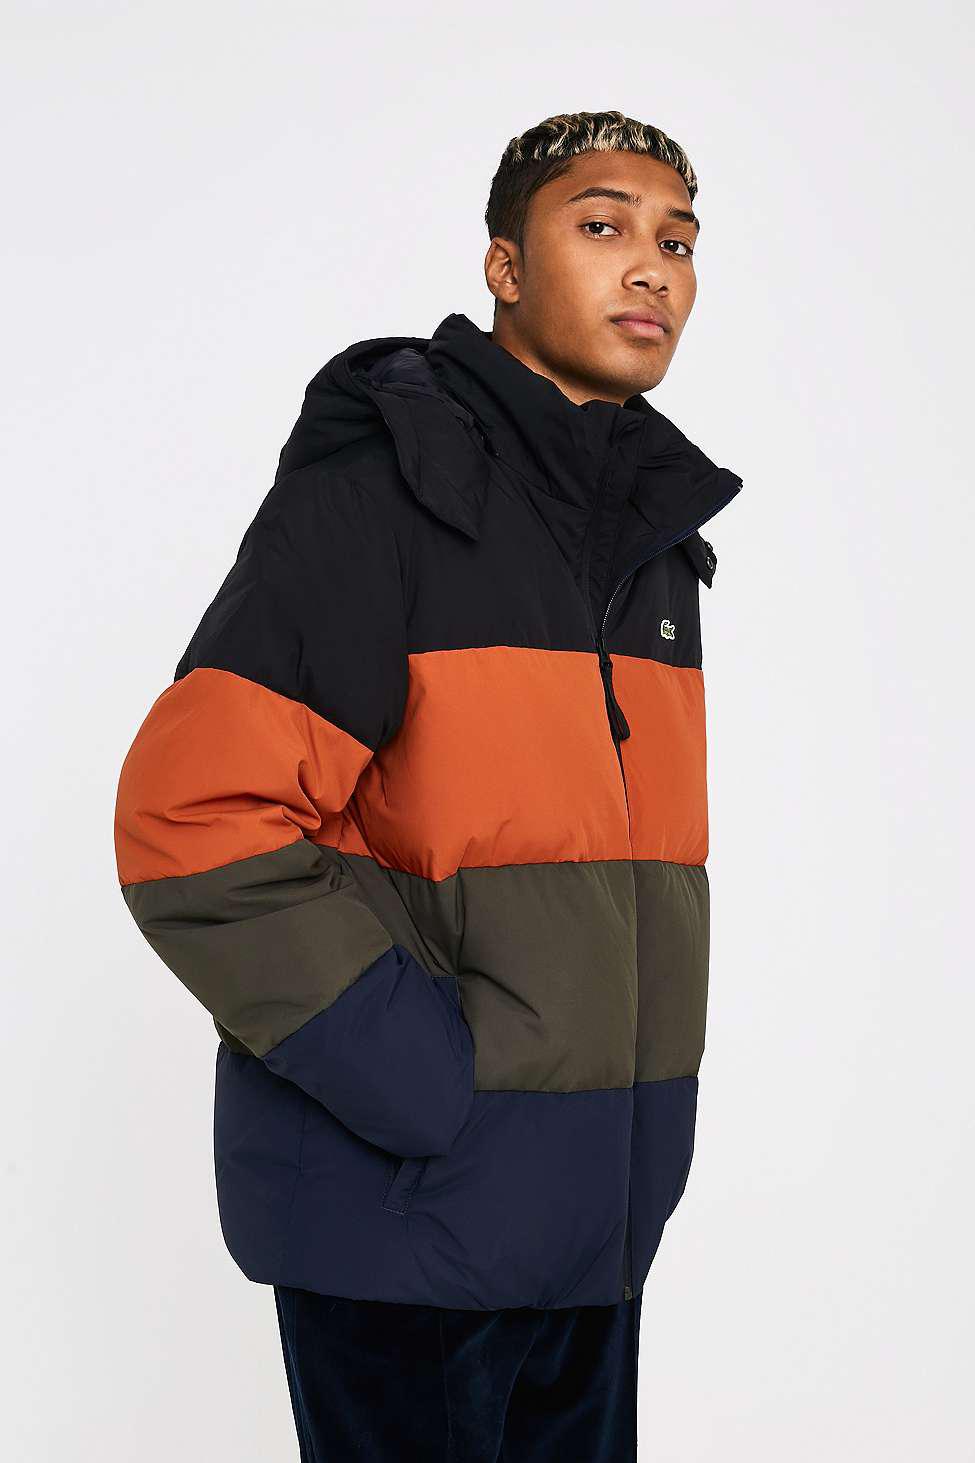 lacoste colour block padded jacket